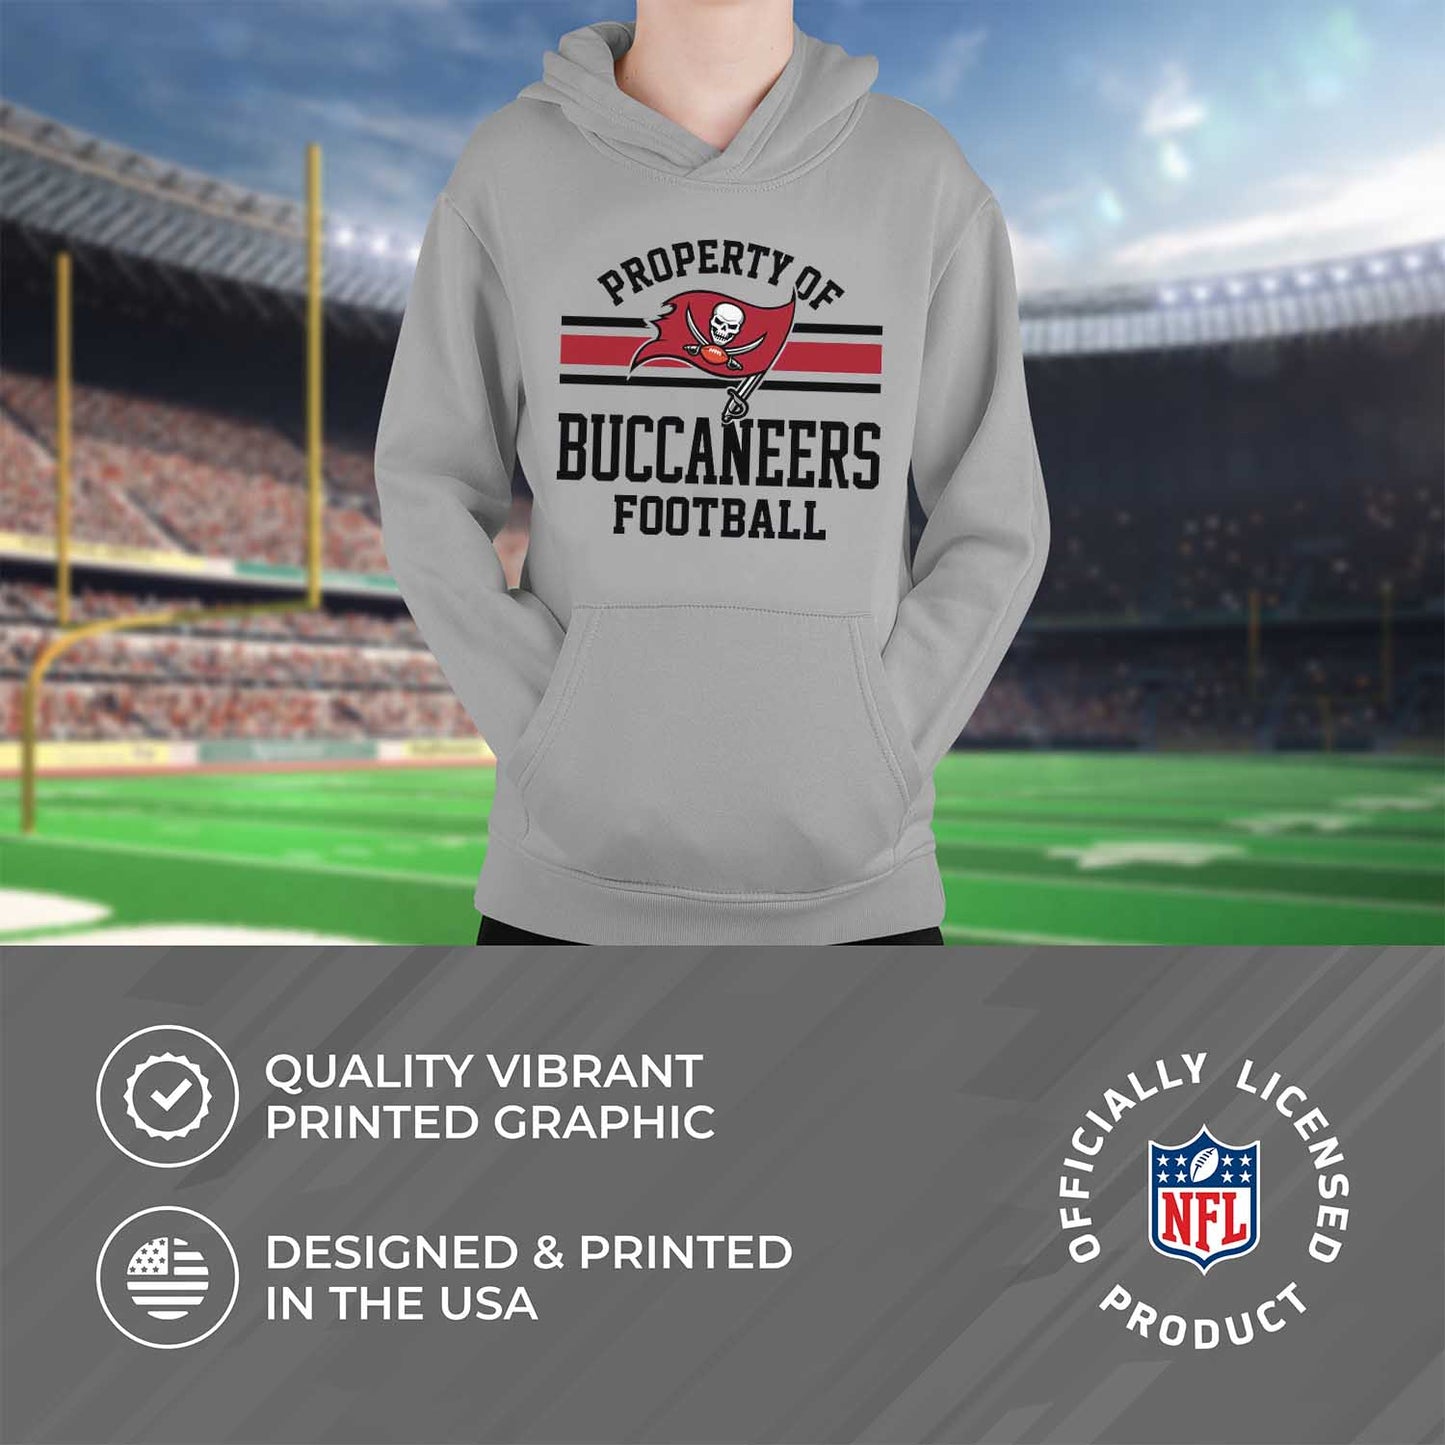 Tampa Bay Buccaneers NFL Youth Property Of Hooded Sweatshirt - Sport Gray